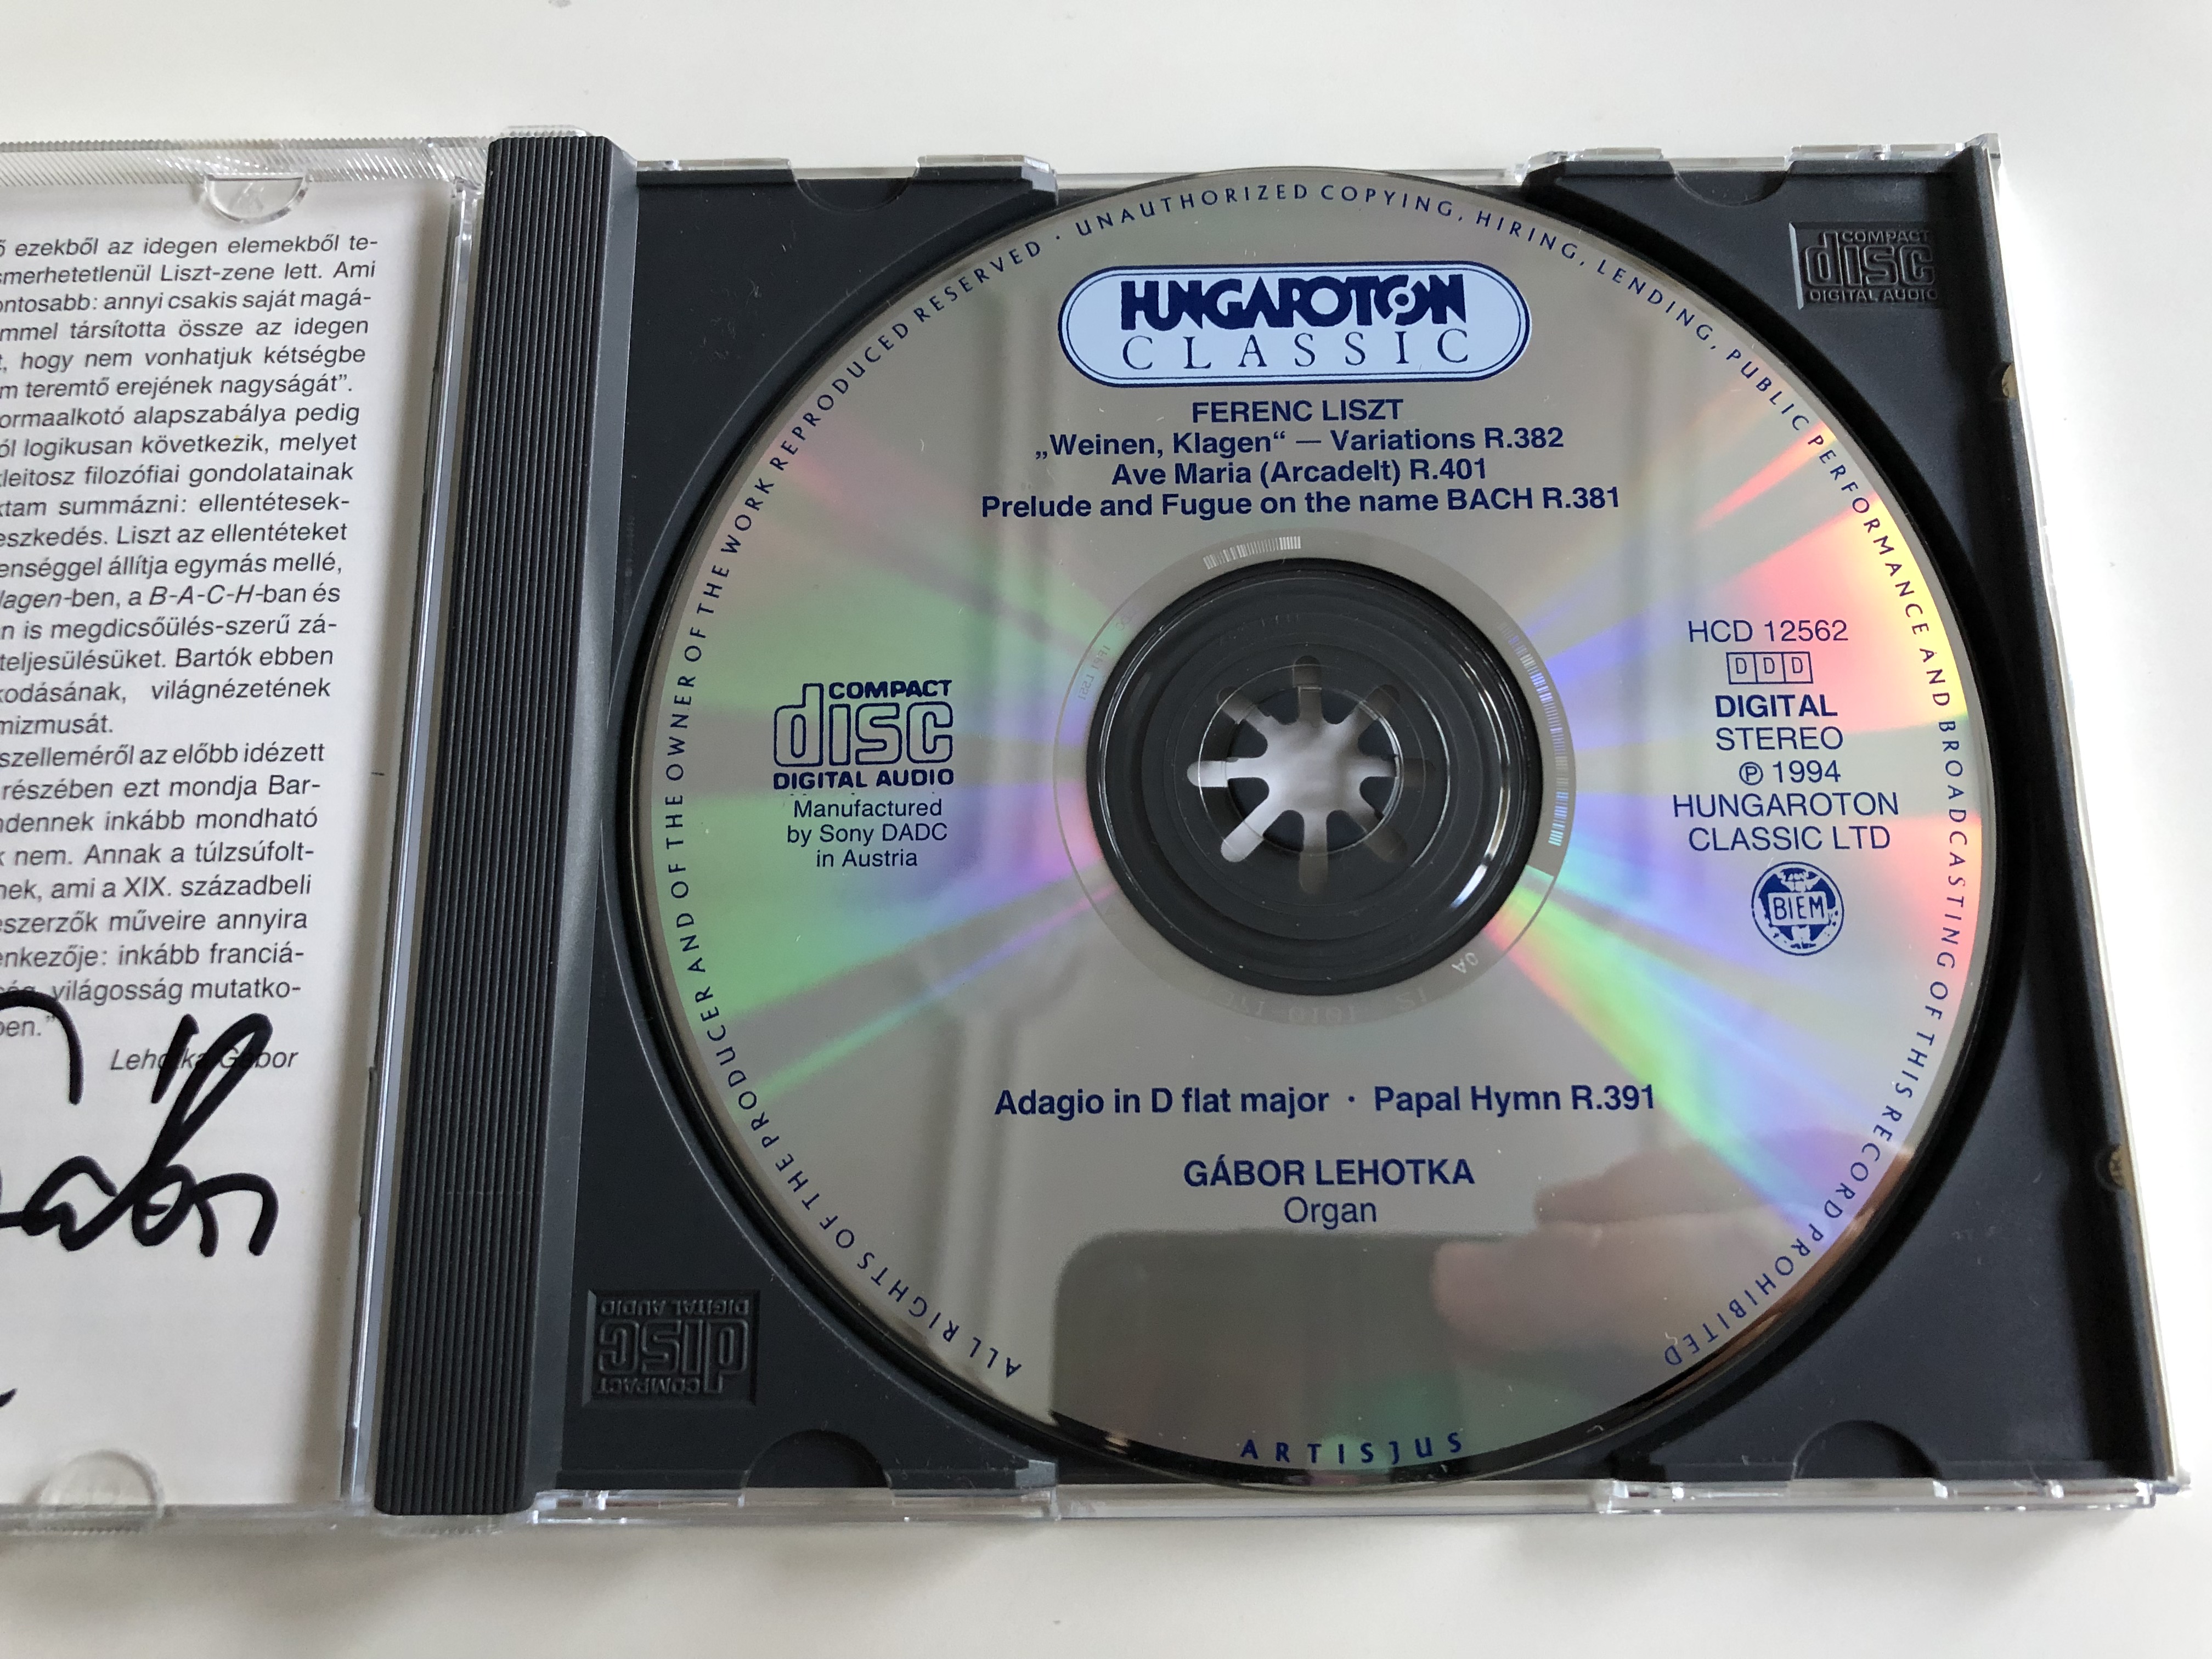 -liszt-weinen-klagen-sorgen-zagen-variations-ave-maria-prelude-and-fugue-on-the-name-bach-g-bor-lehotka-organ-hungaroton-classic-audio-cd-1994-hcd-12562-5-.jpg